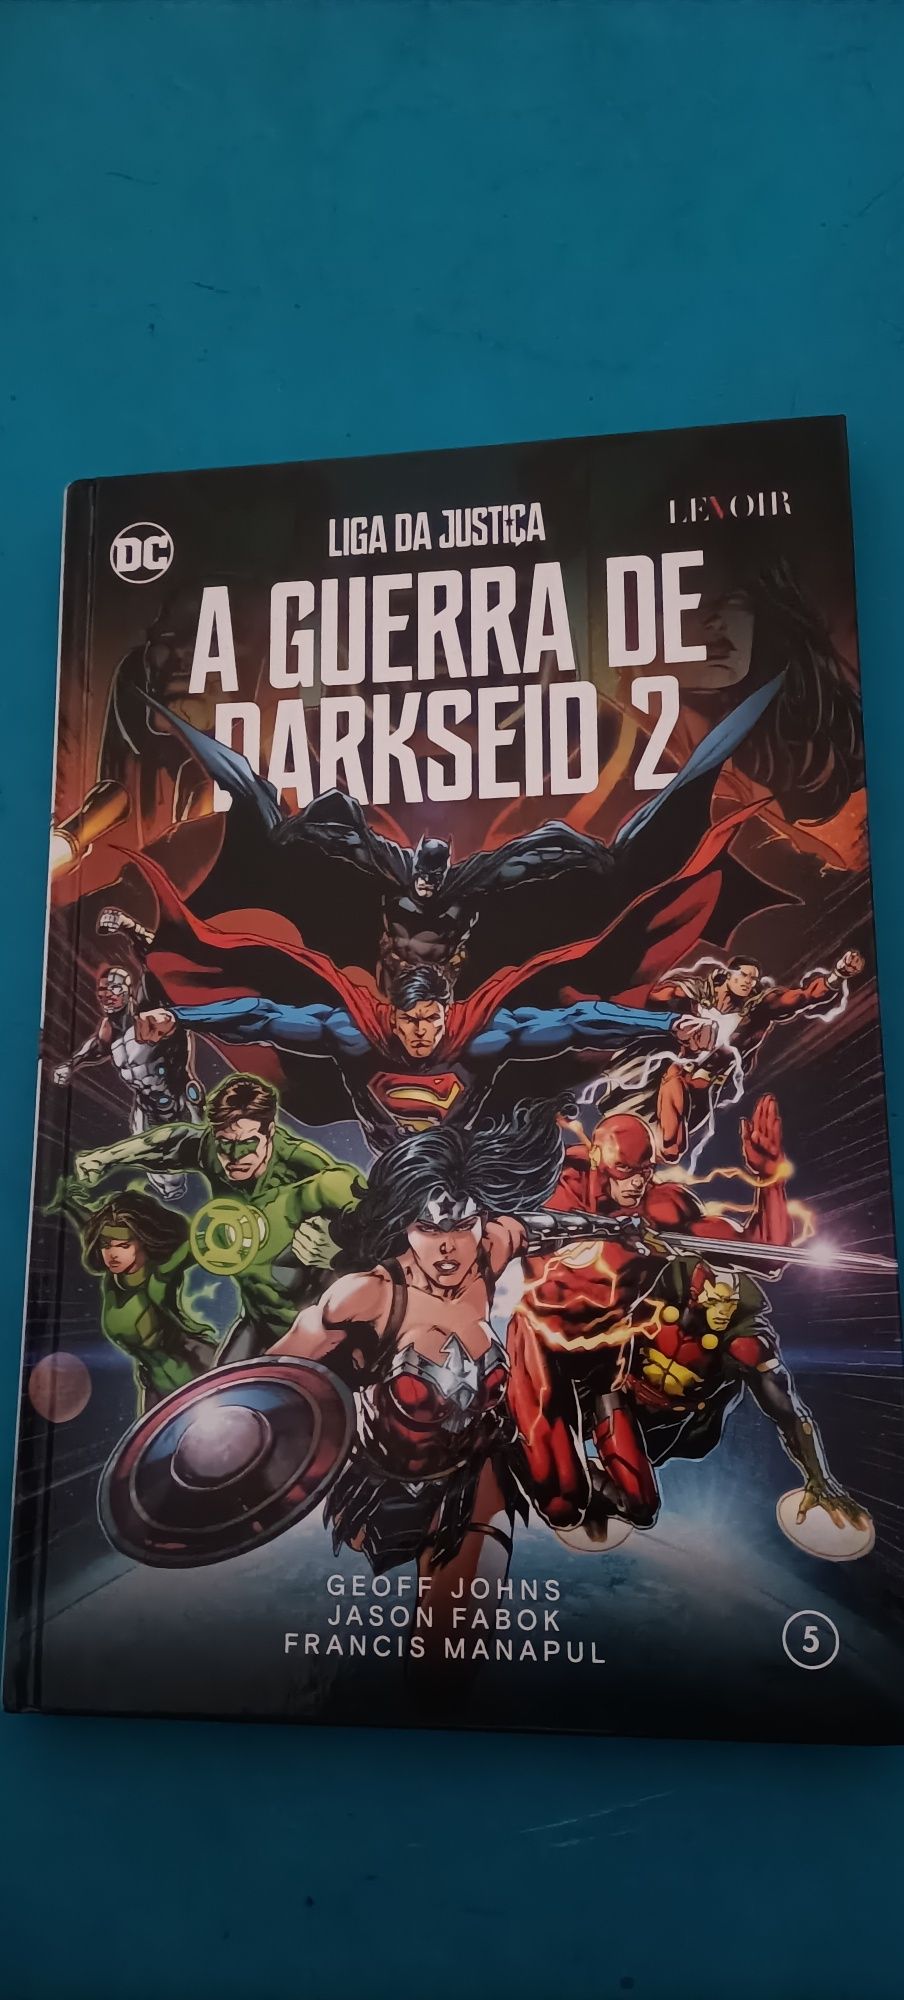 BD Liga da justiça: A gurra de Darkseid 2